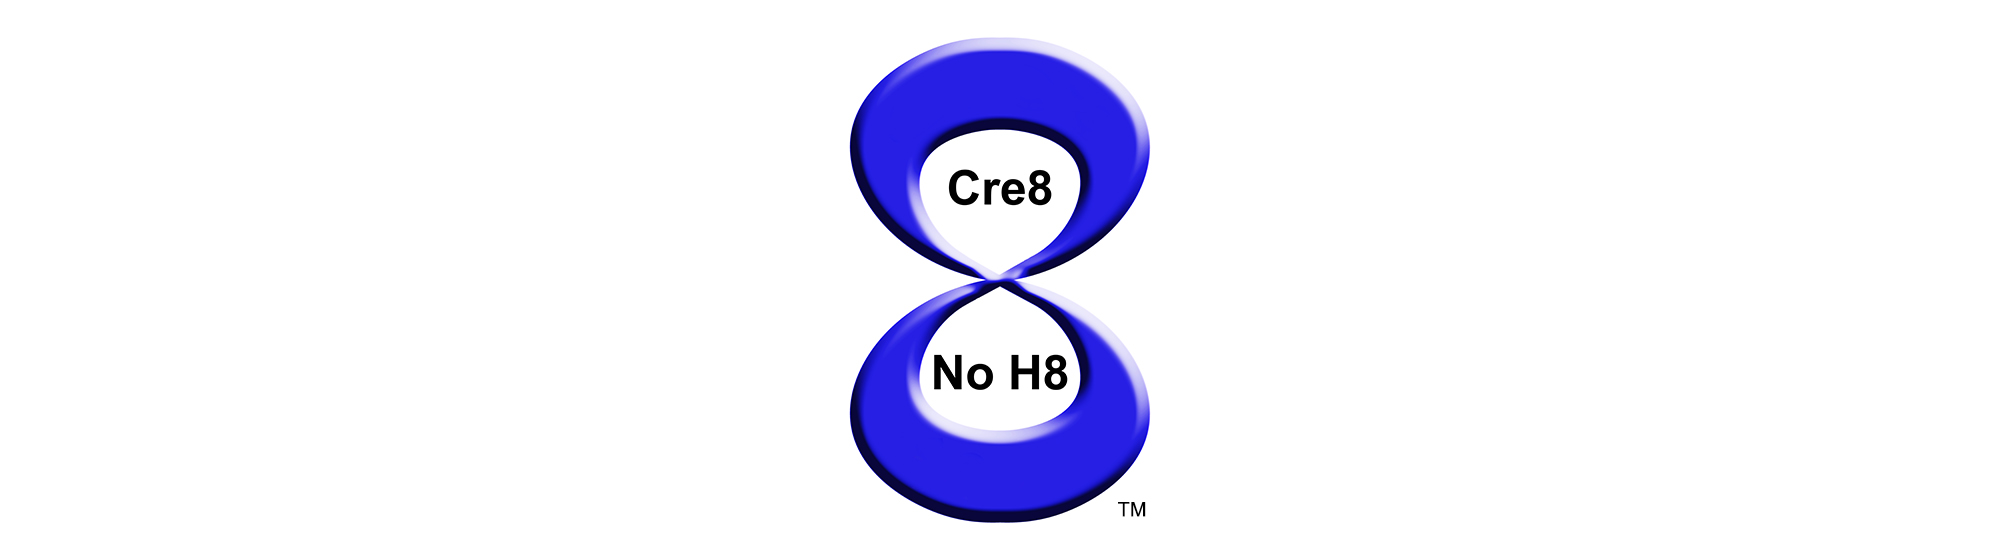 Create No Hate Cre8 No H8